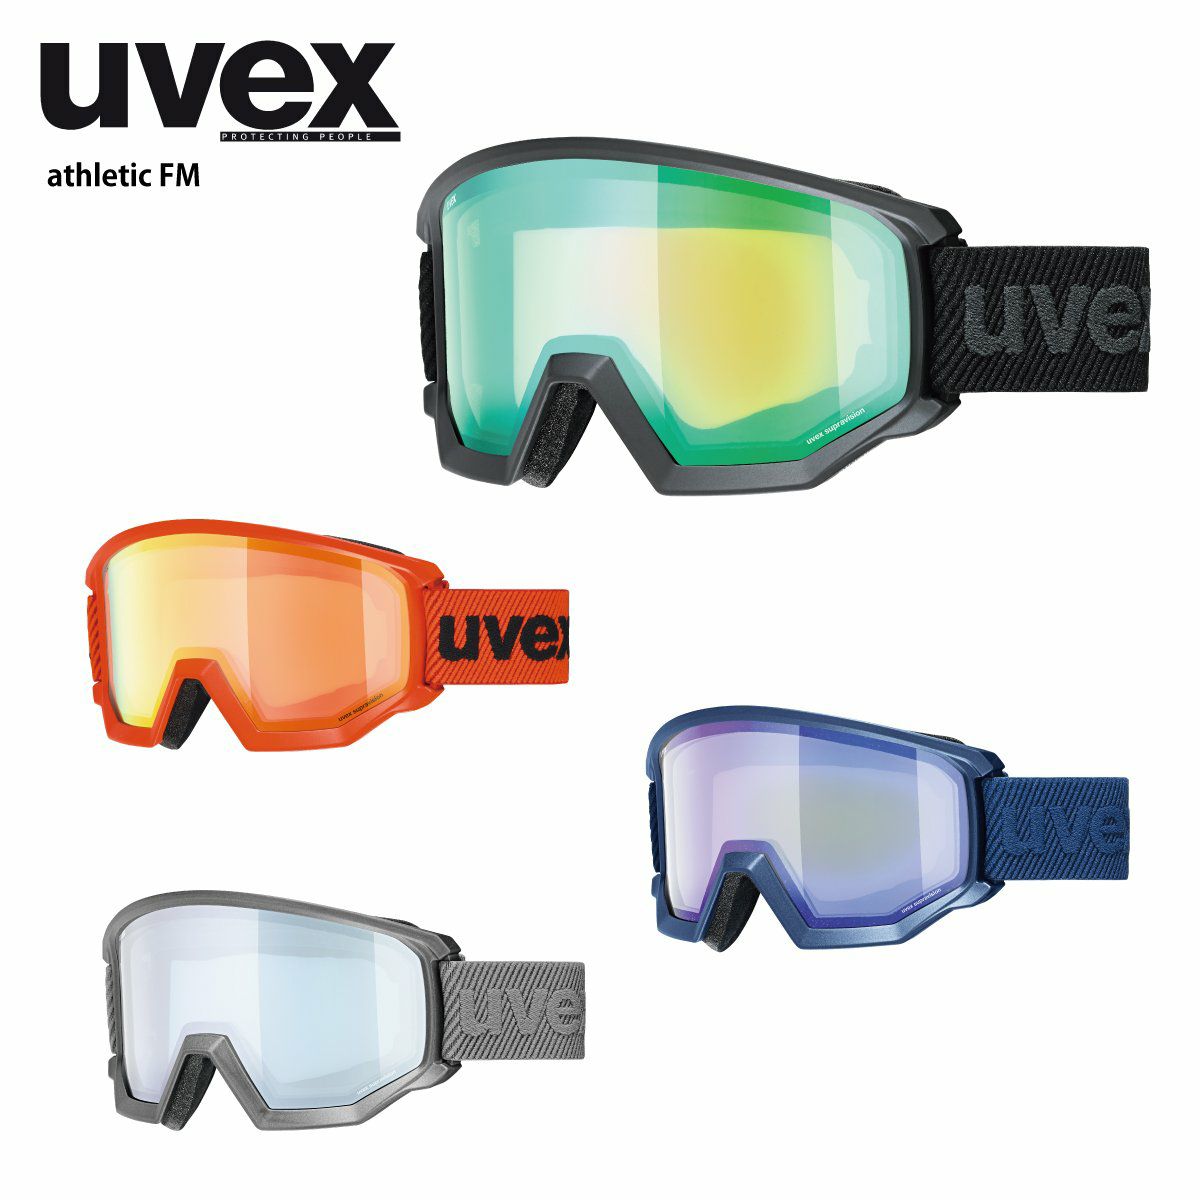 uvex(ウベックス) スキースノーボードゴーグル ユニセックス ハイコントラストミラー シングルレンズ メガネ使用可 athletic C